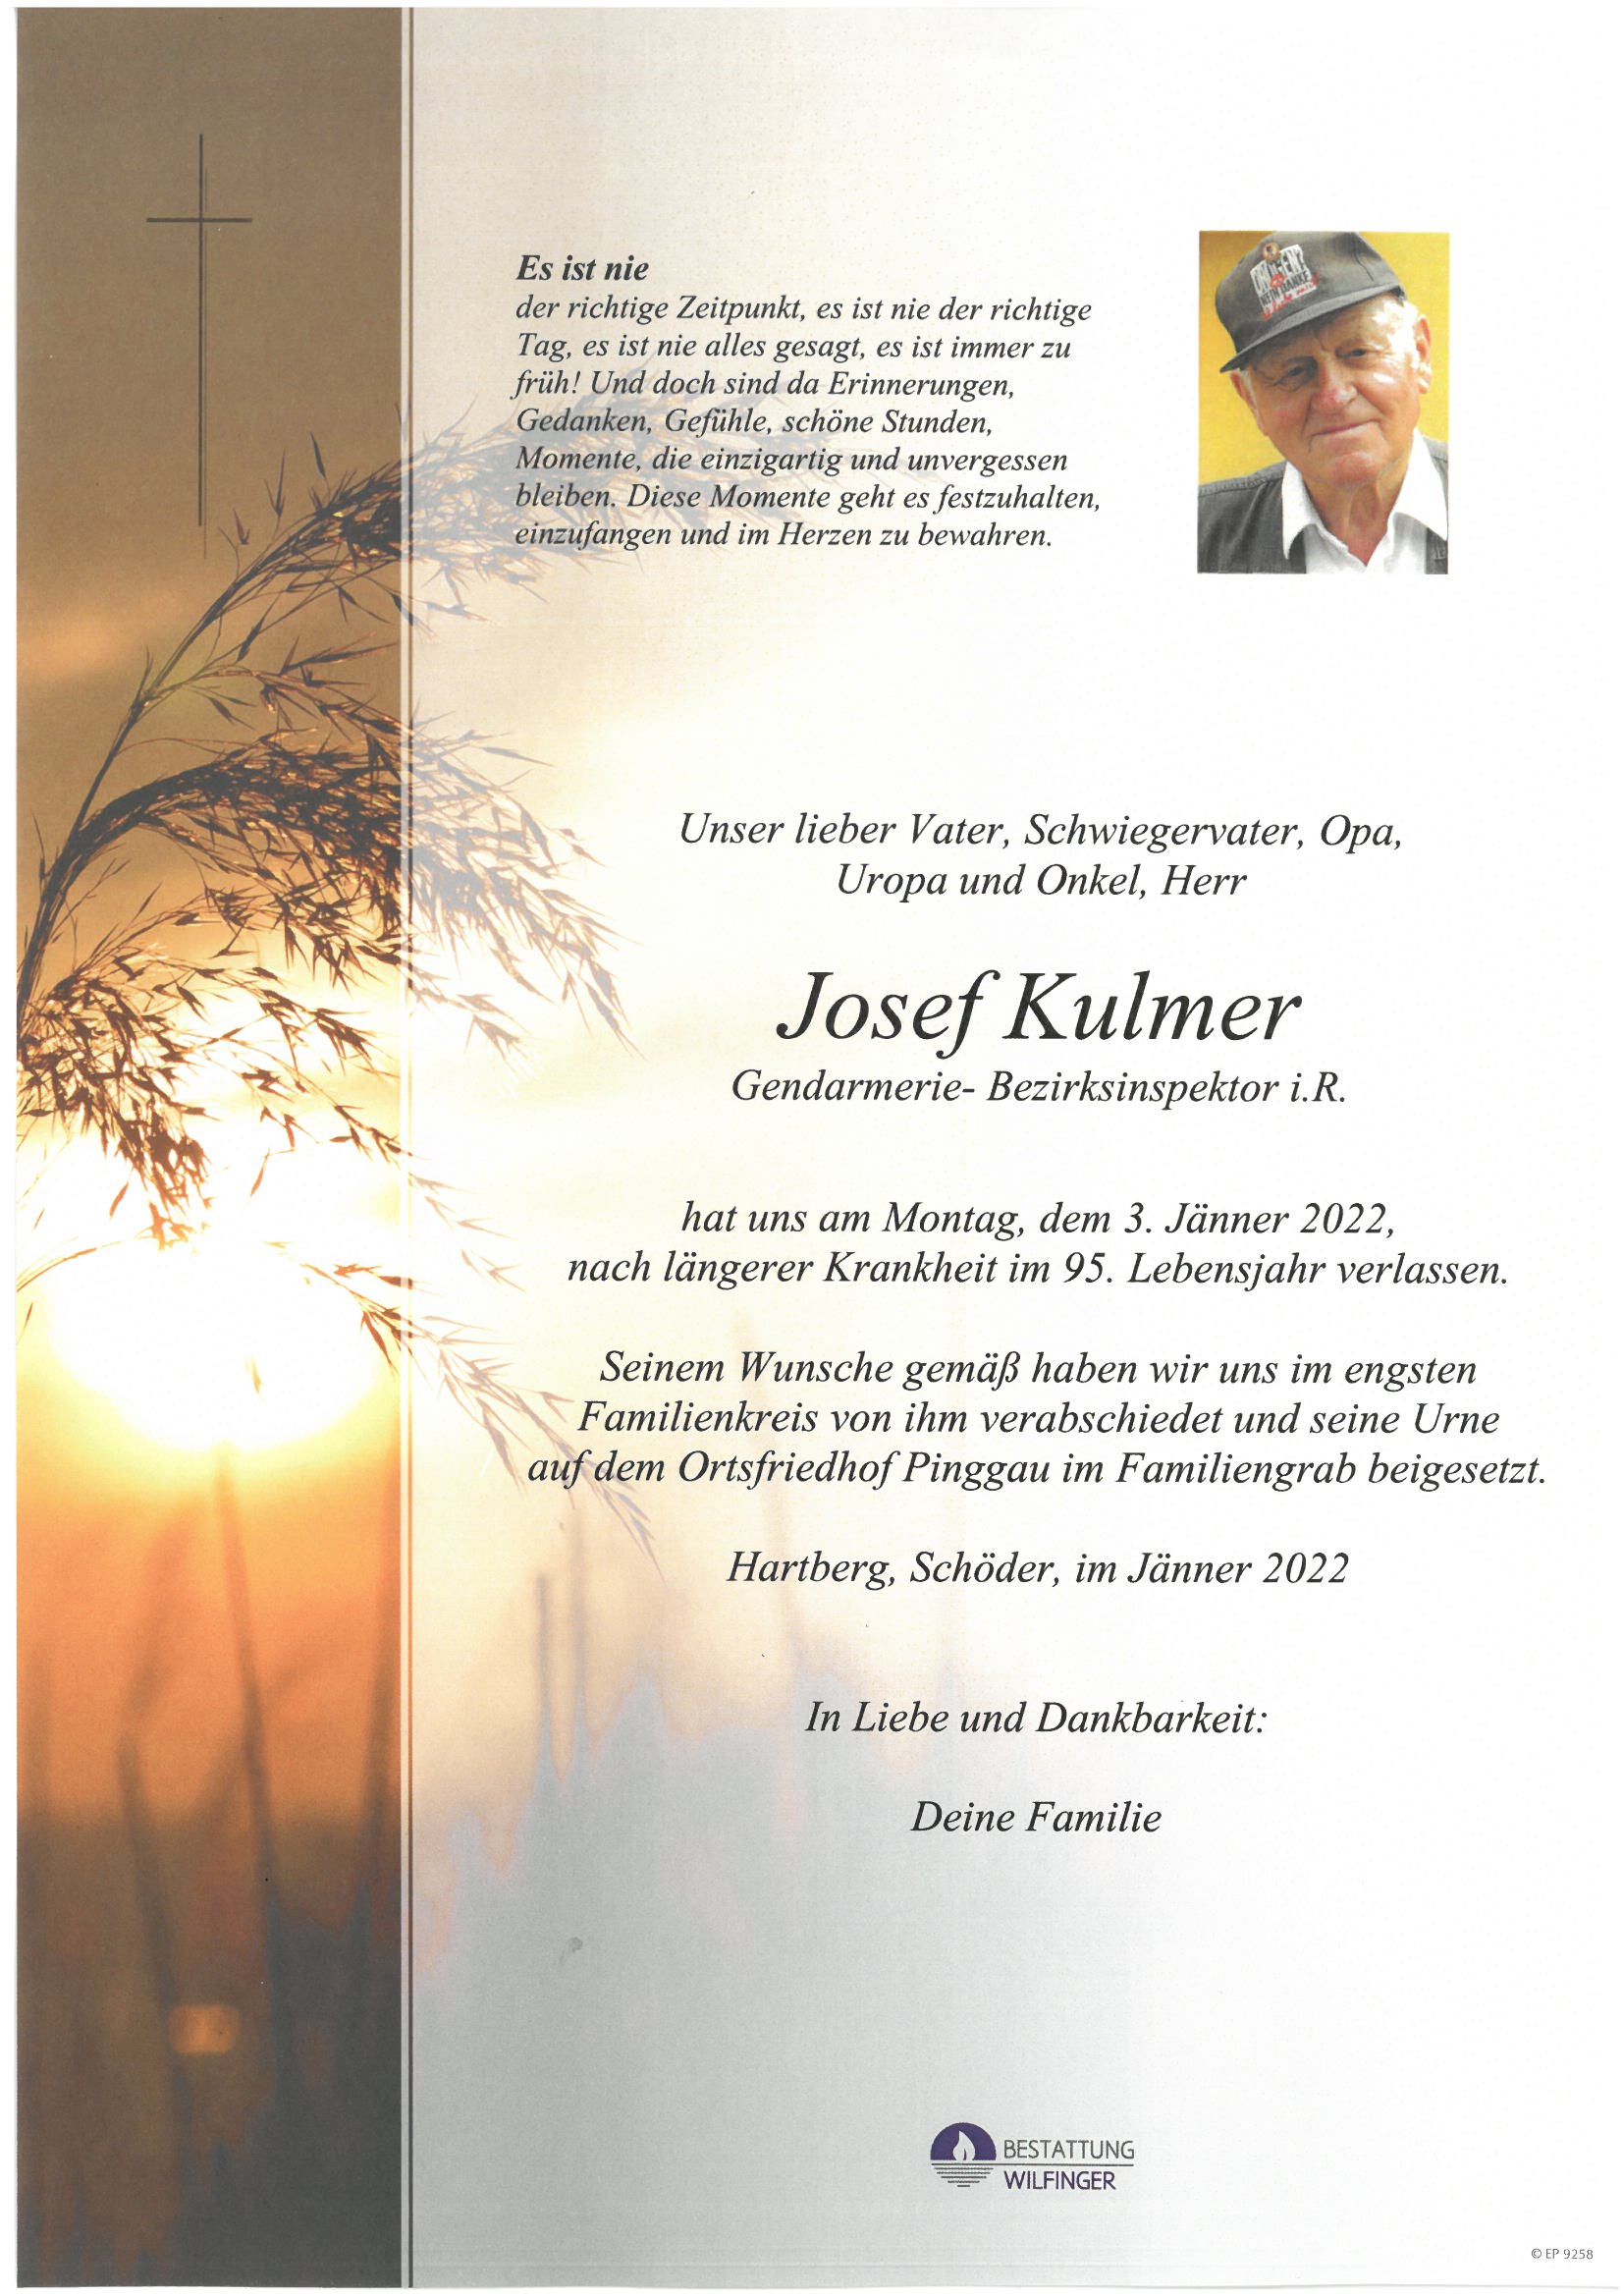 Josef Kulmer